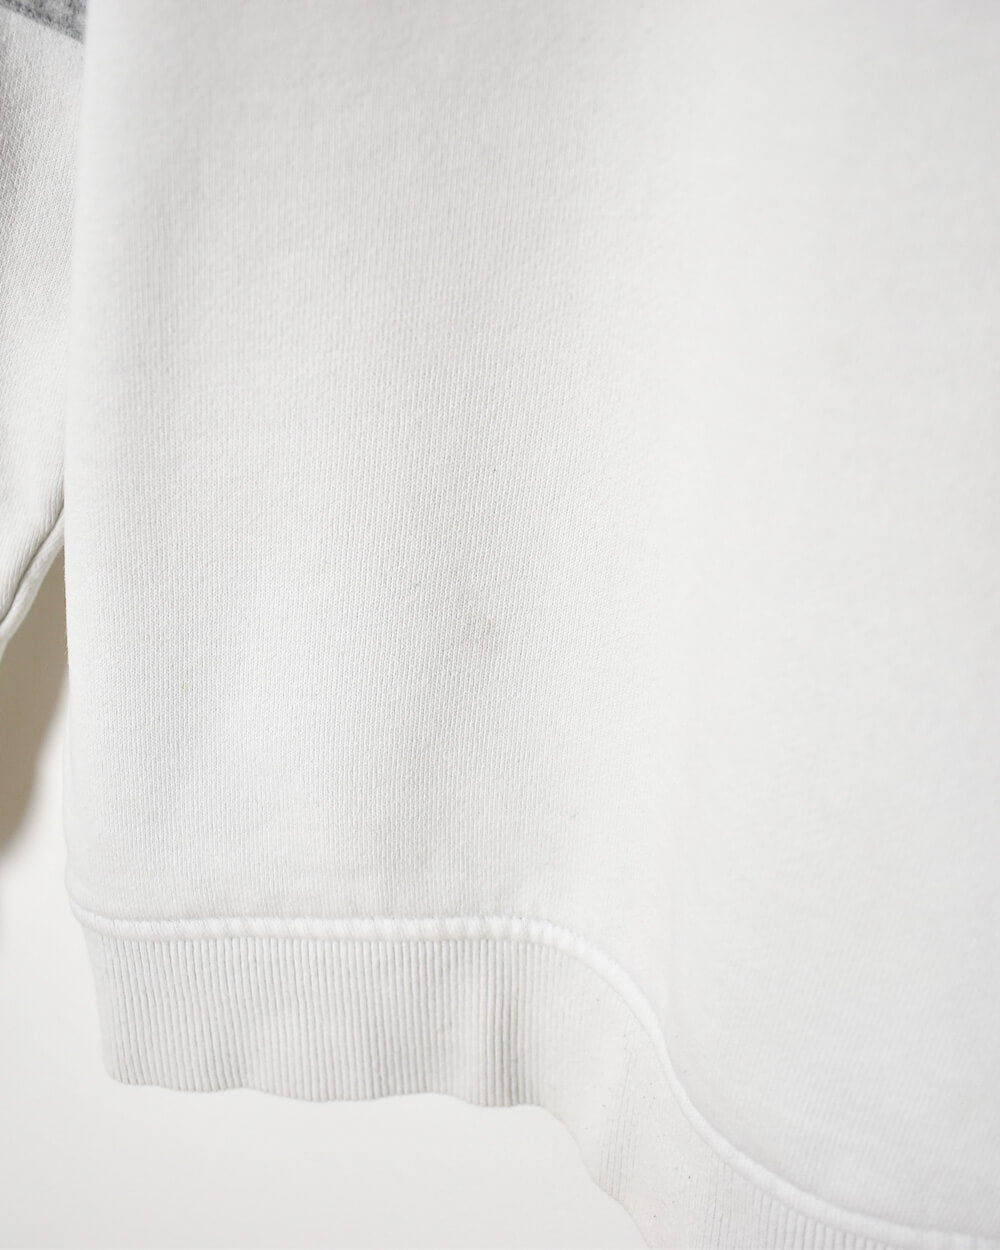 White Fila Women's Sweatshirt - Large